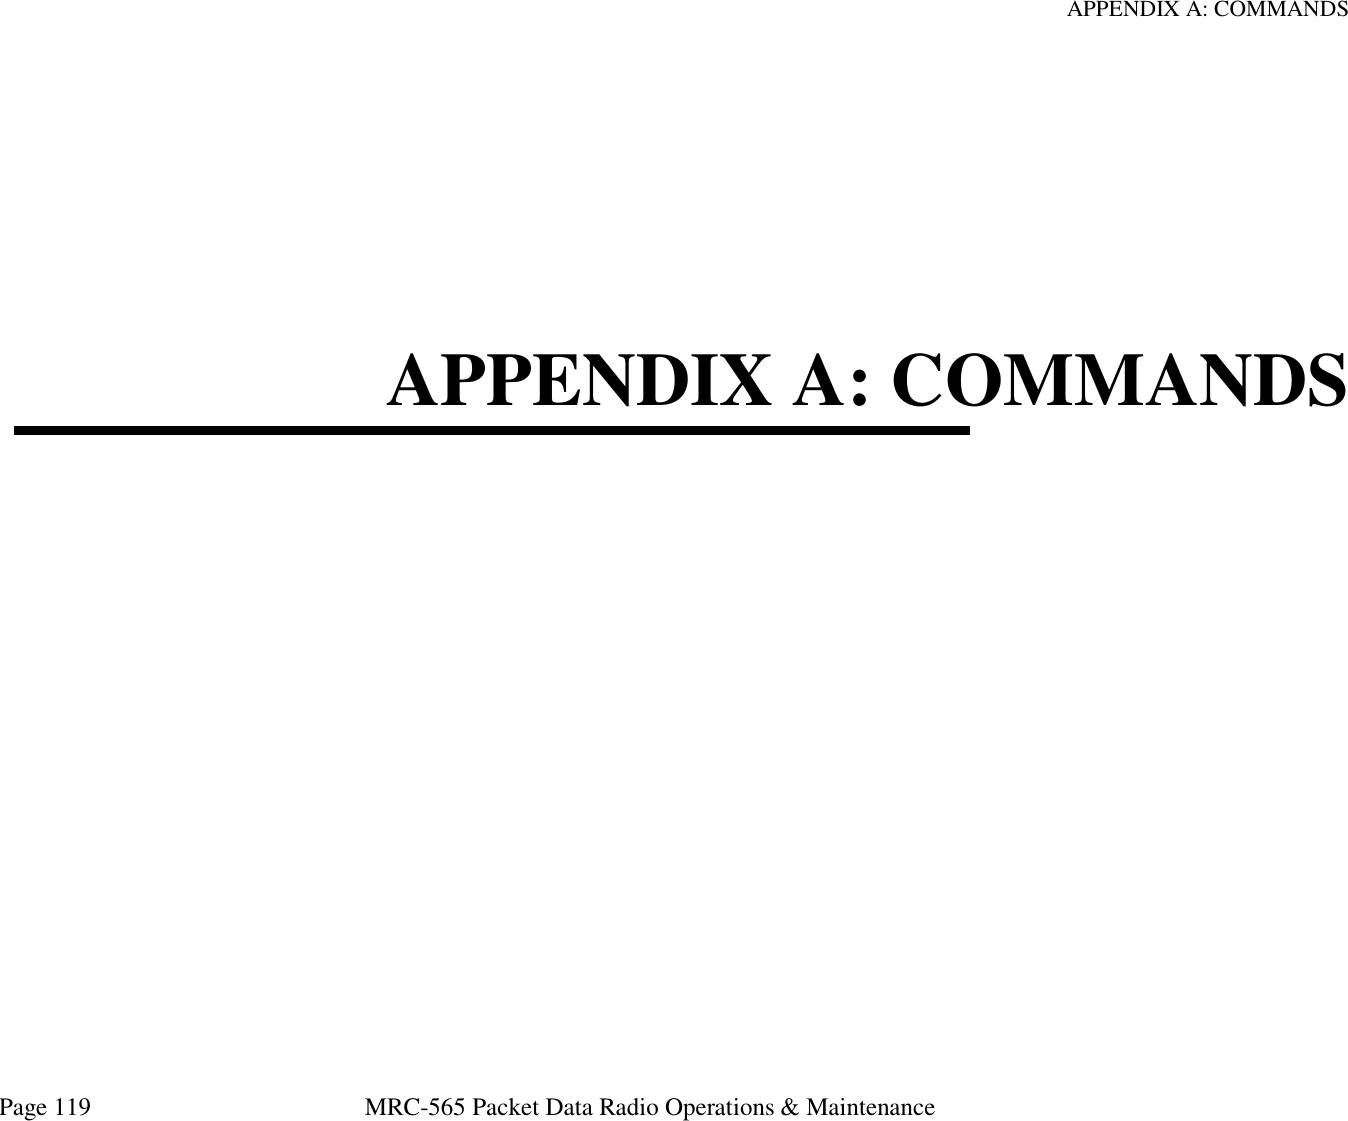 APPENDIX A: COMMANDS Page 119  MRC-565 Packet Data Radio Operations &amp; Maintenance         APPENDIX A: COMMANDS     